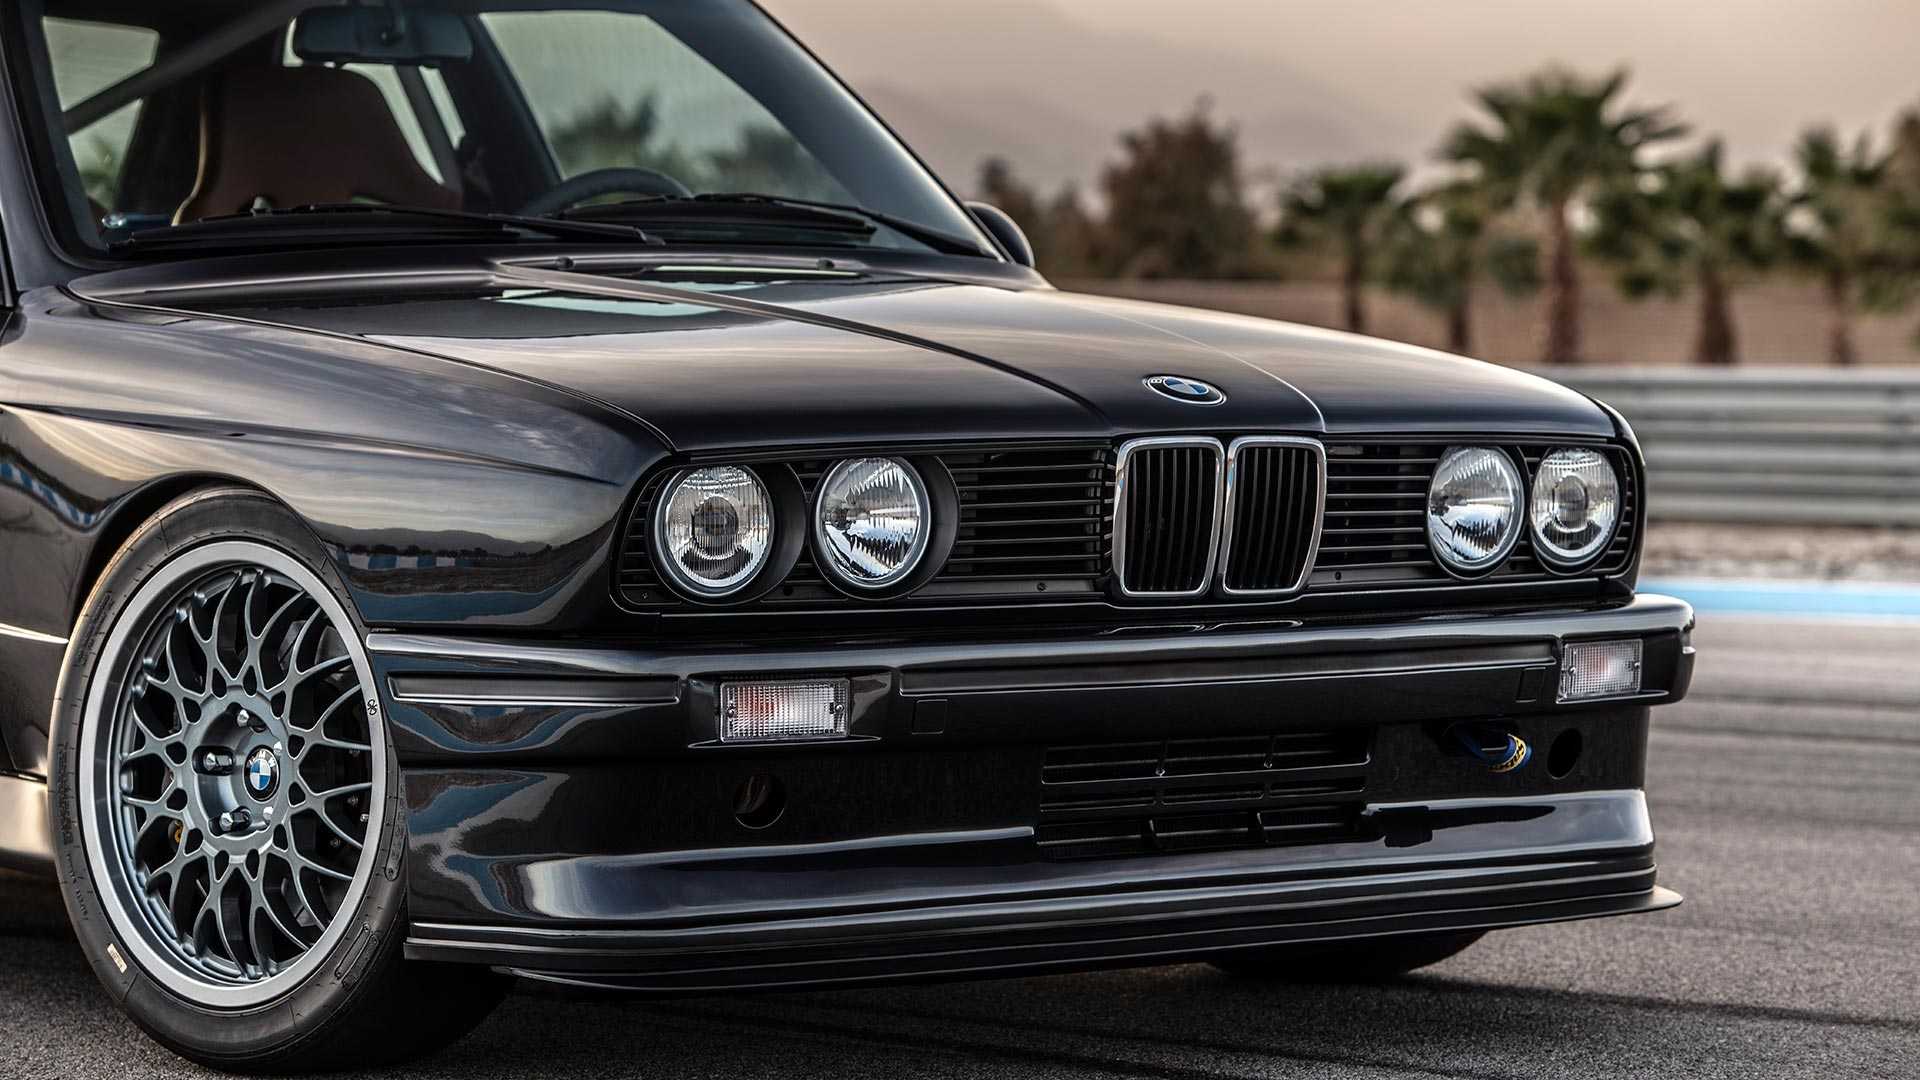 Redux BMW E30 M3 restomod